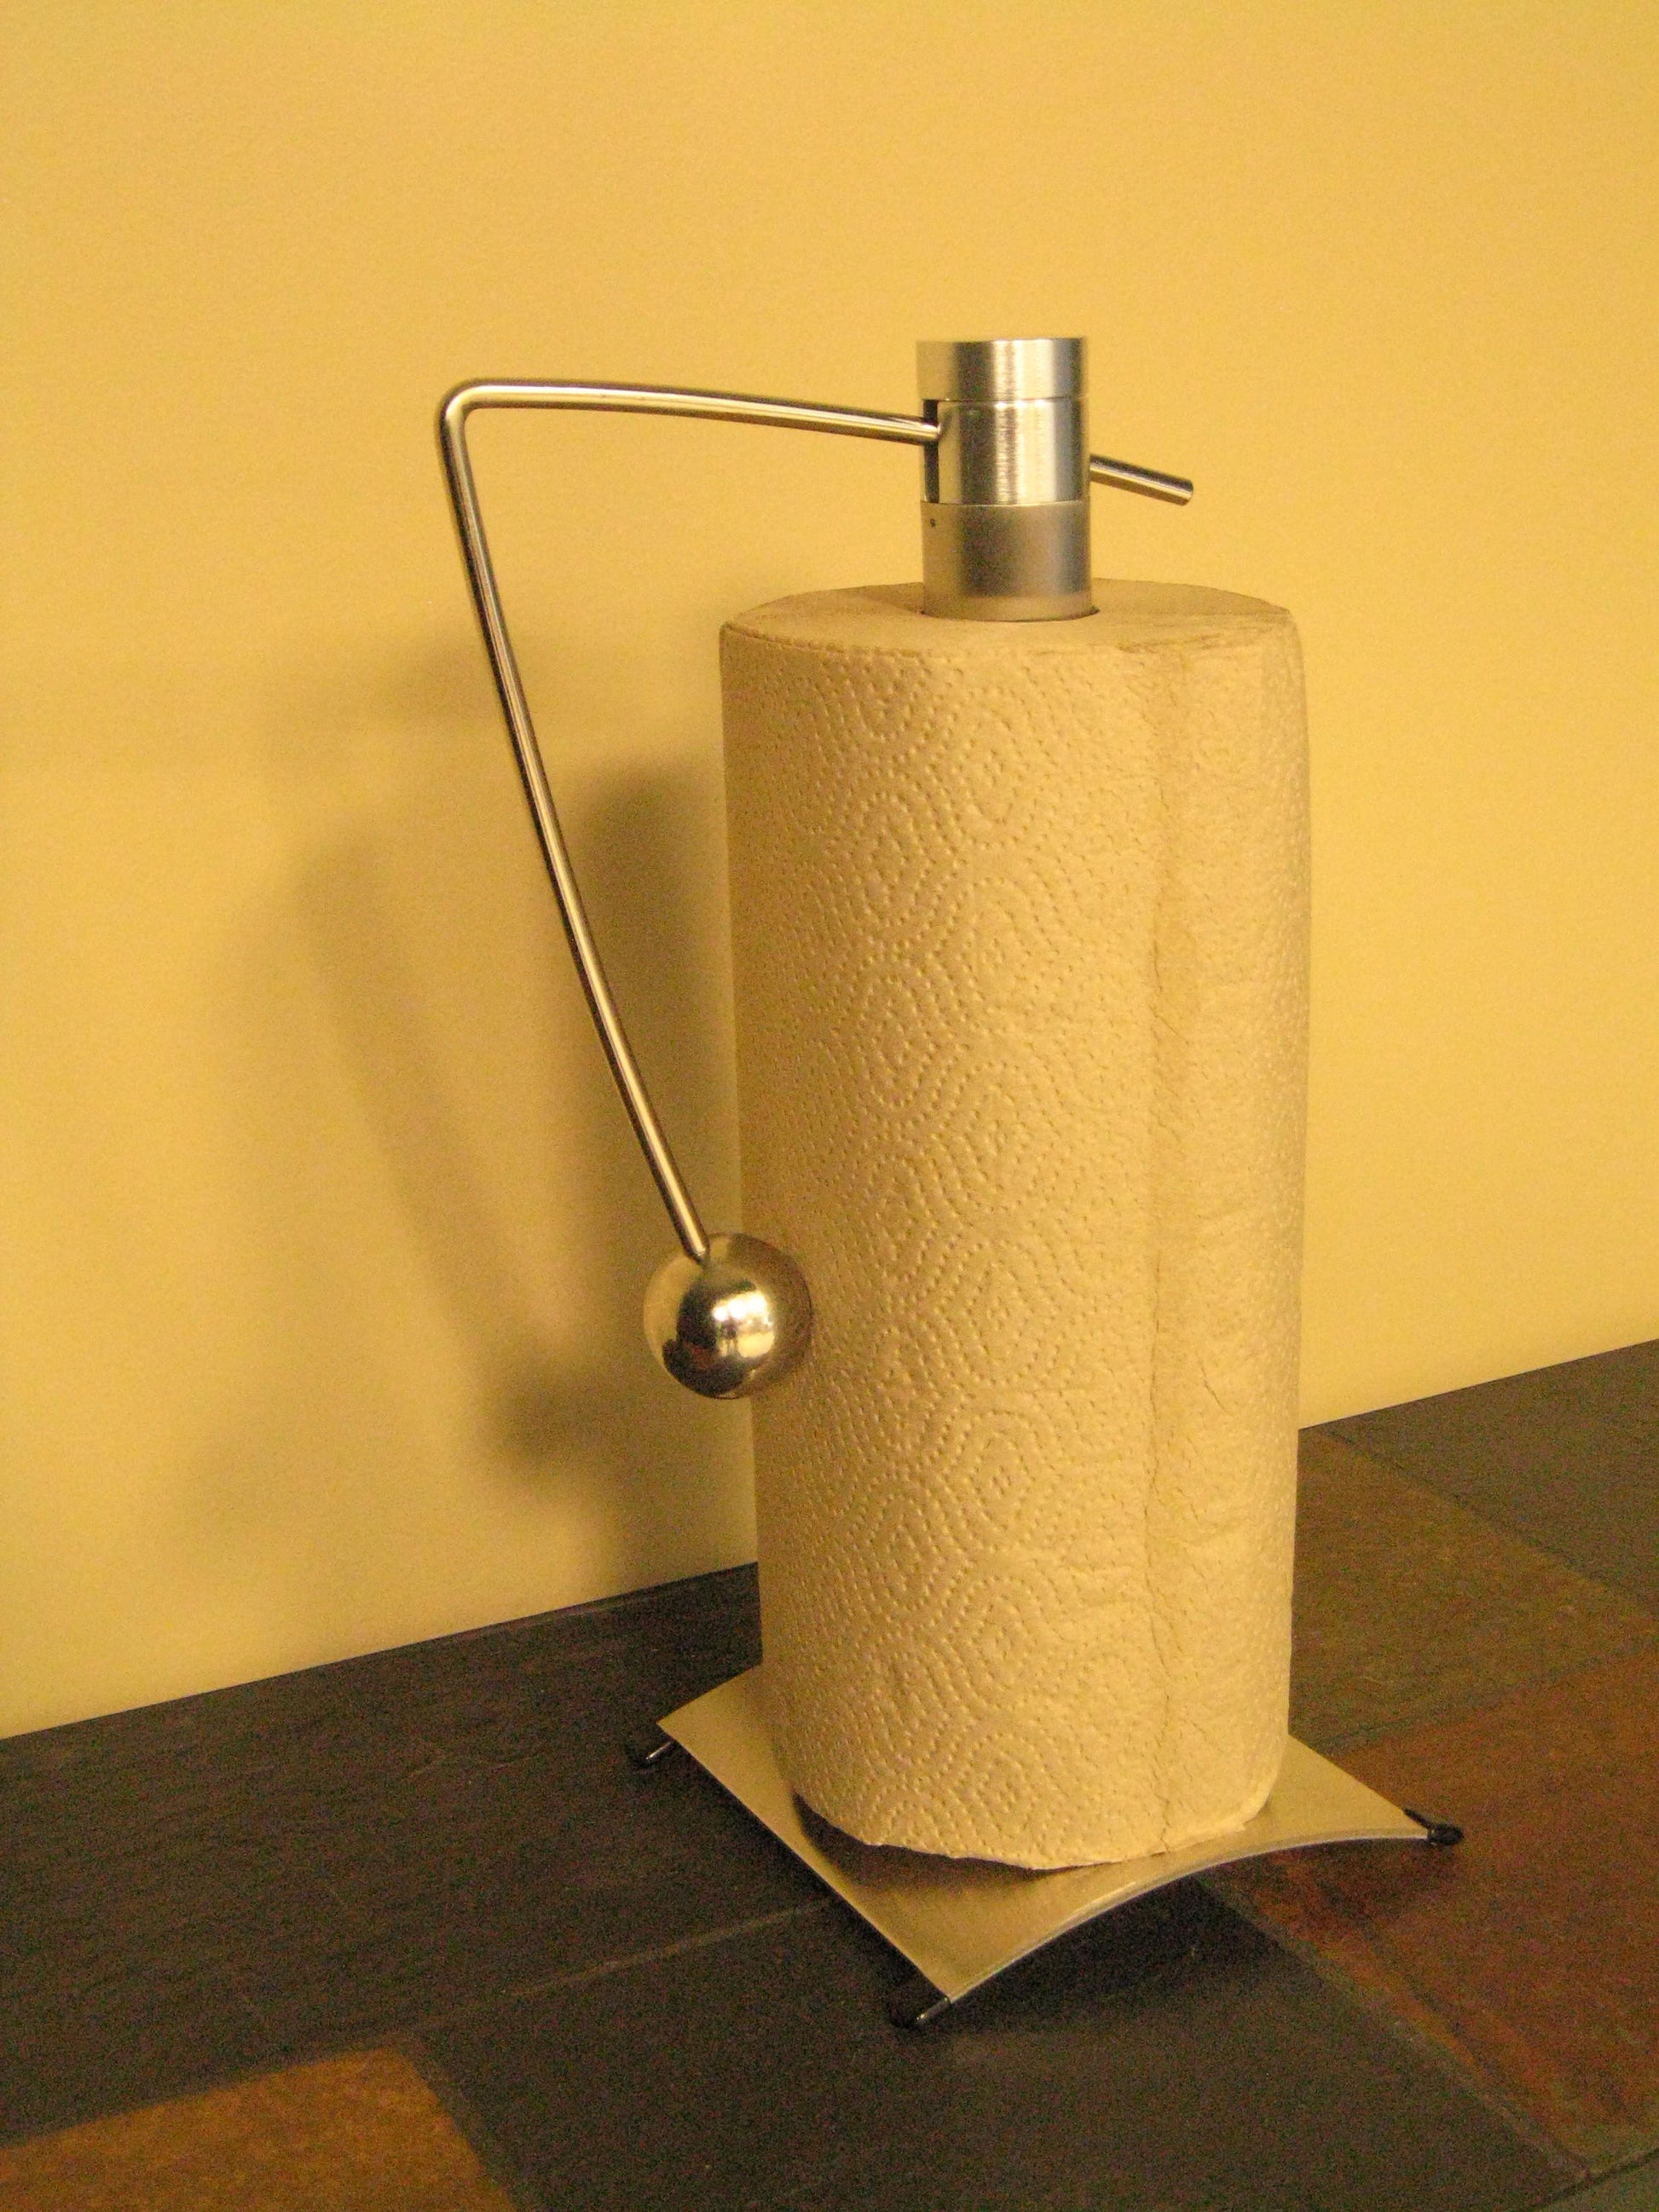 Zojila Isis Paper Towel Roll Holder, Brushed Nickel